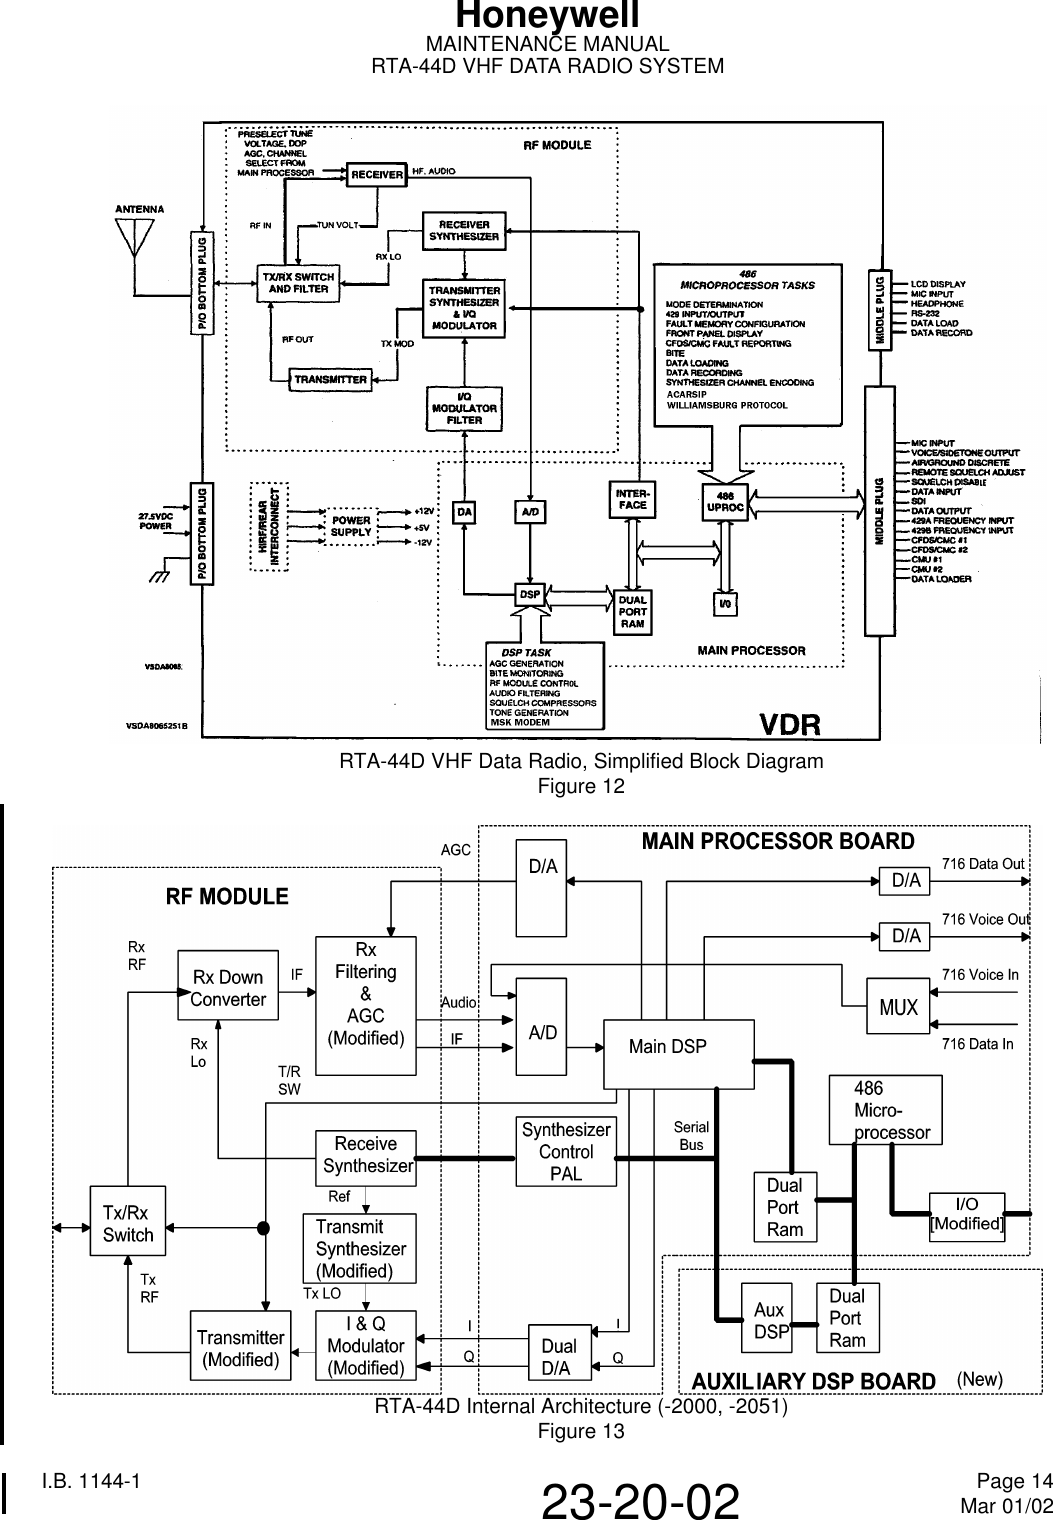 HoneywellMAINTENANCE MANUALRTA-44D VHF DATA RADIO SYSTEMI.B. 1144-1 Page 14Mar 01/0223-20-02RTA-44D VHF Data Radio, Simplified Block DiagramFigure 12RTA-44D Internal Architecture (-2000, -2051)Figure 13